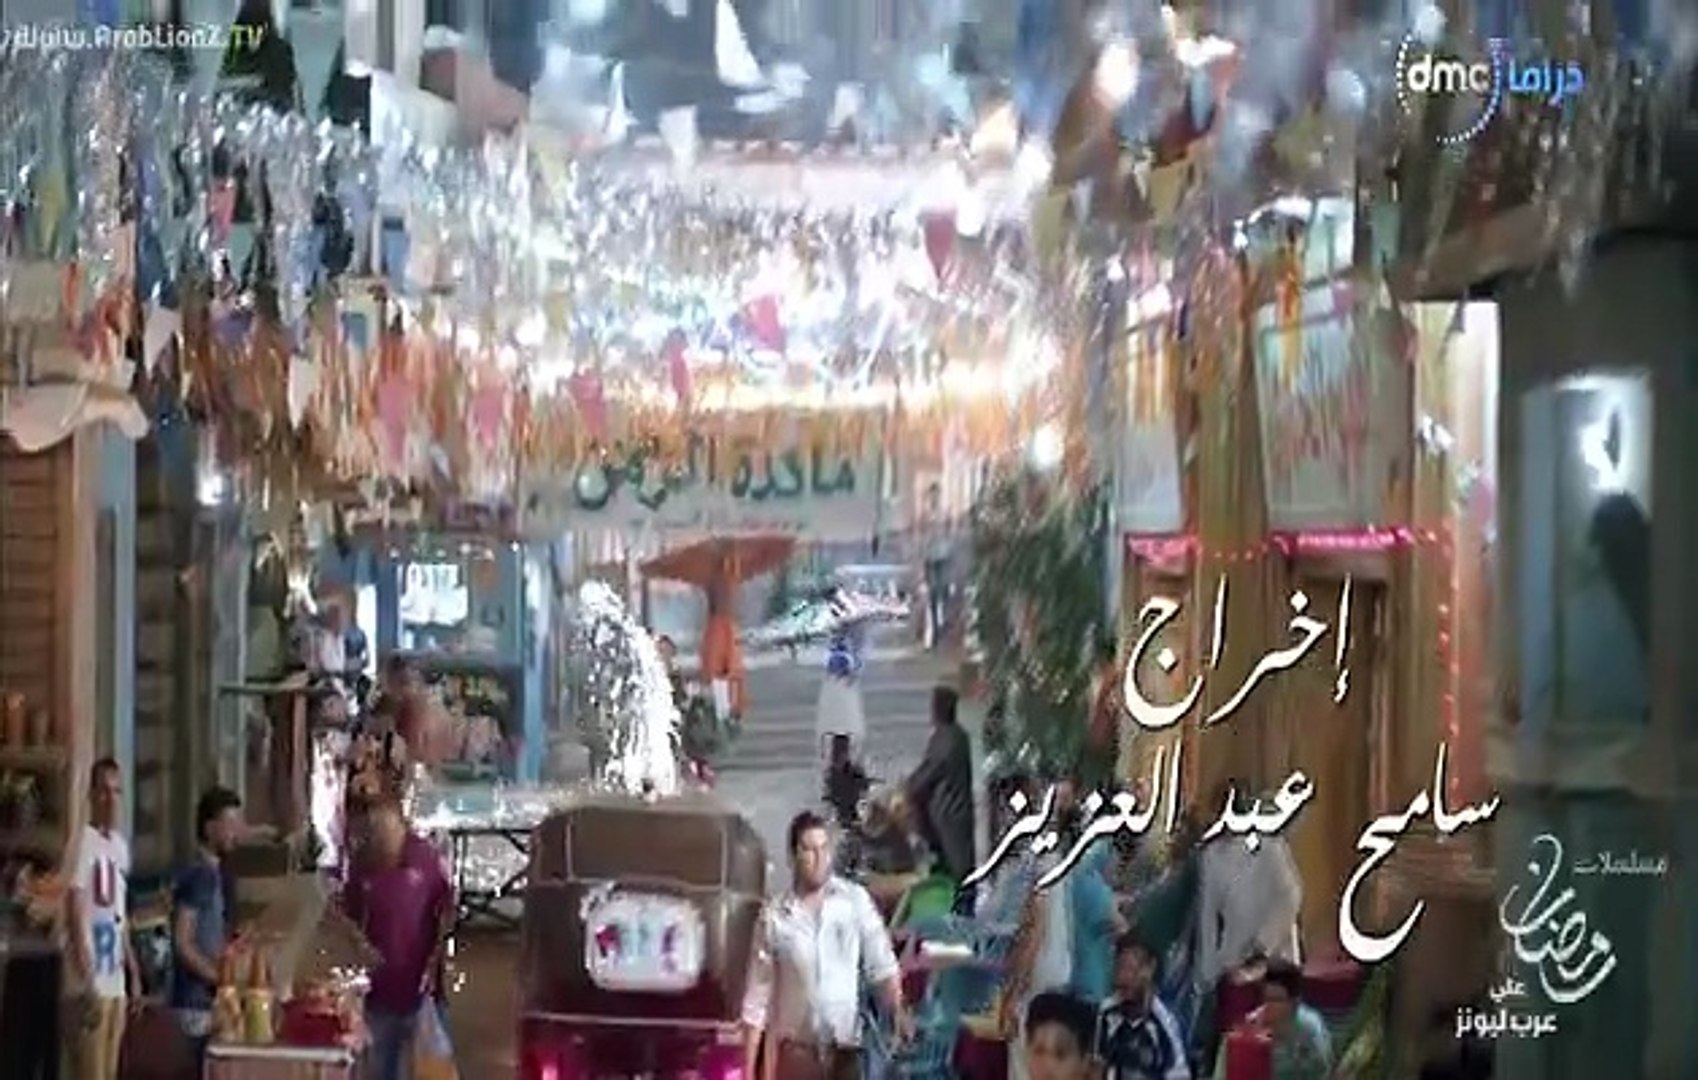 HD مسلسل رمضان كريم الحلقة 1 الاولى كاملة - فيديو Dailymotion